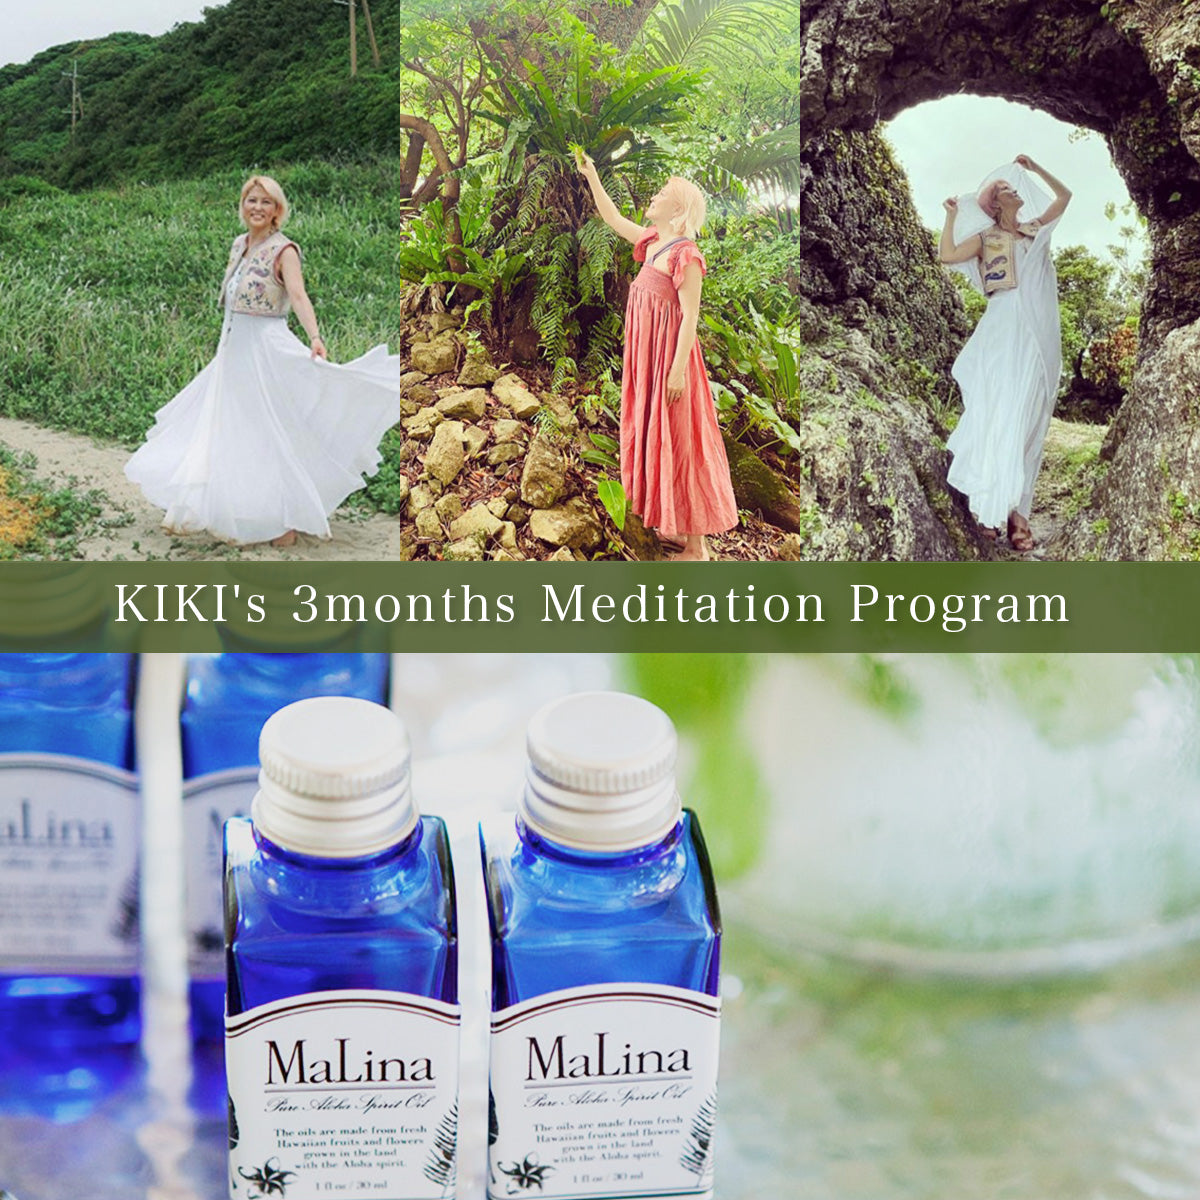 KIKI's 3 months Meditation Program